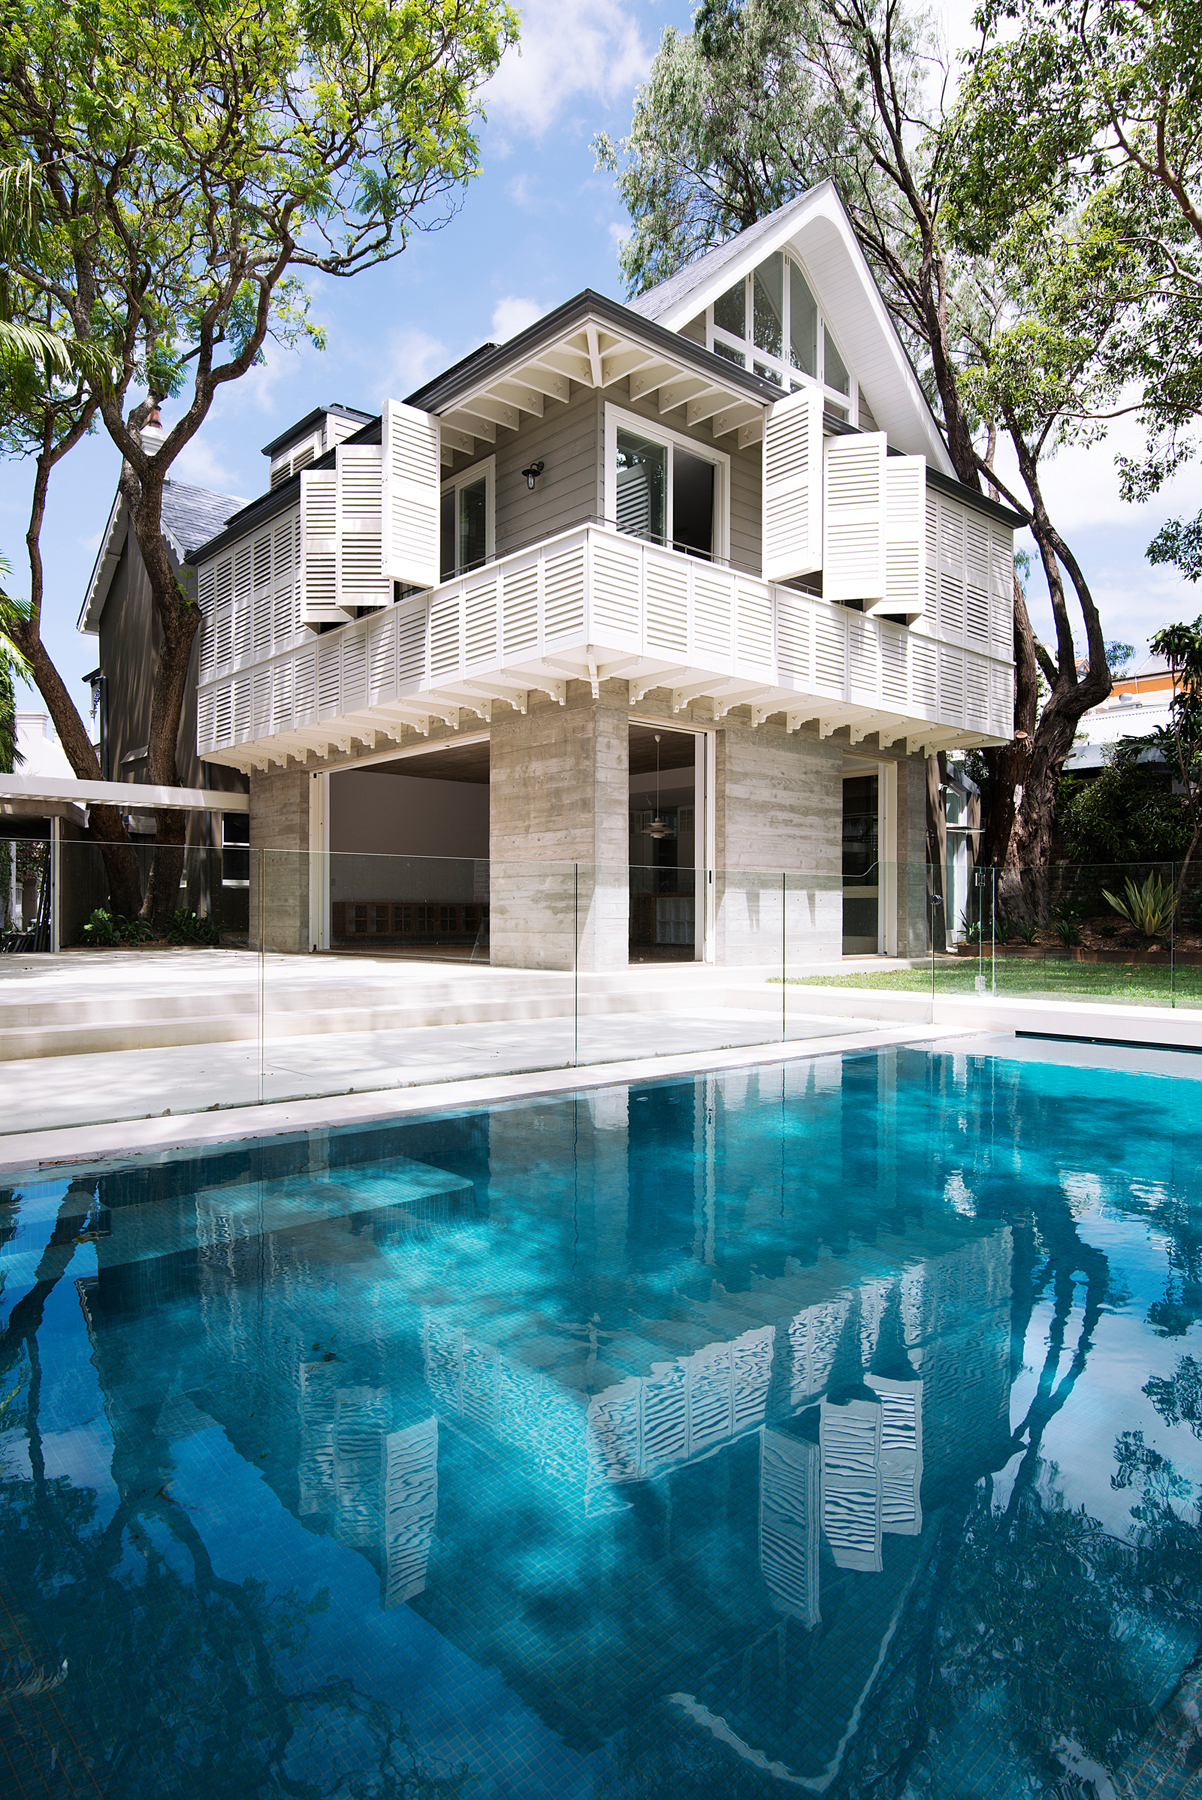 Villa with Large Backyard and Pool